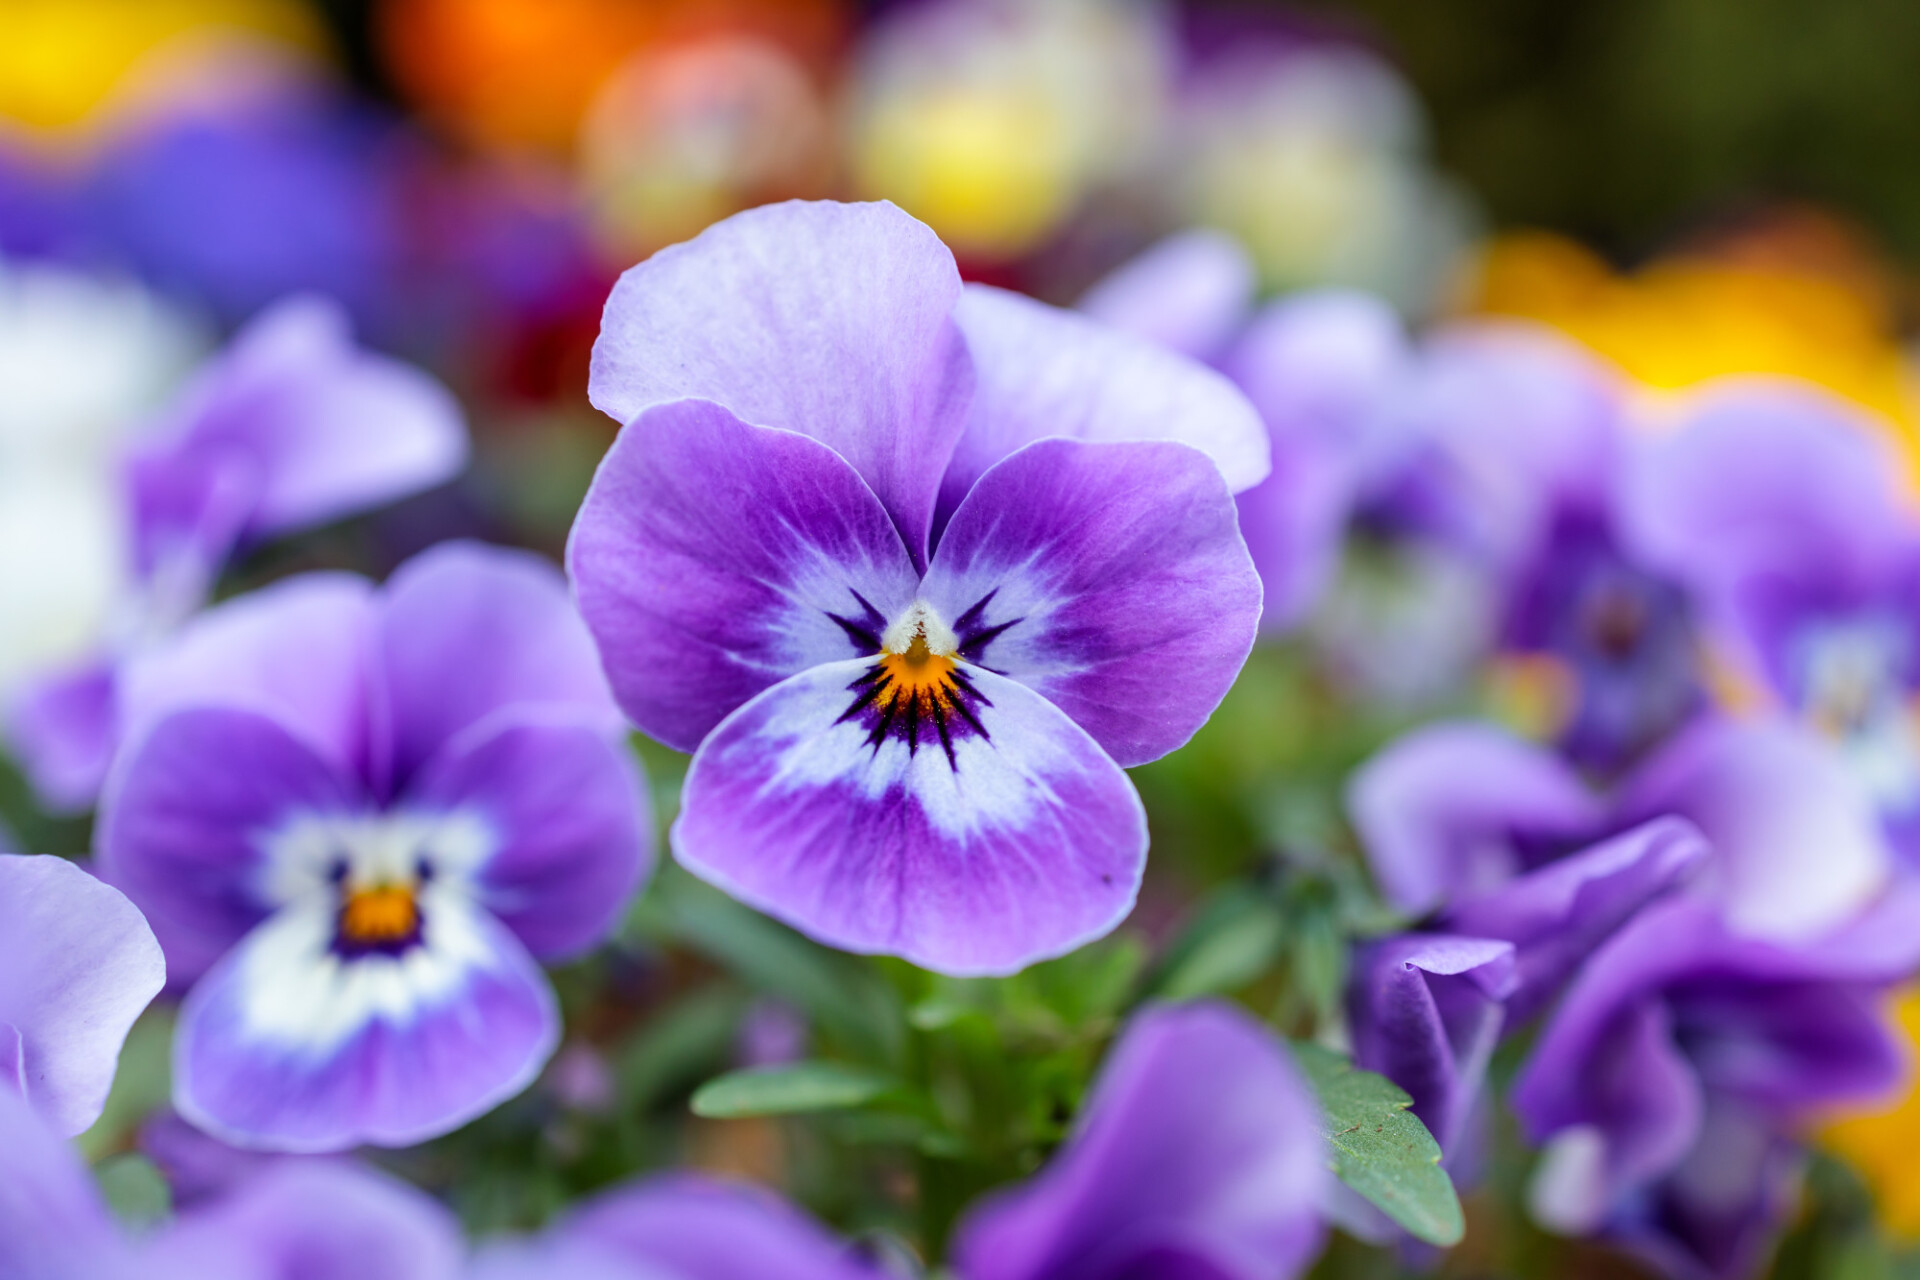 Purple and white viola flowers